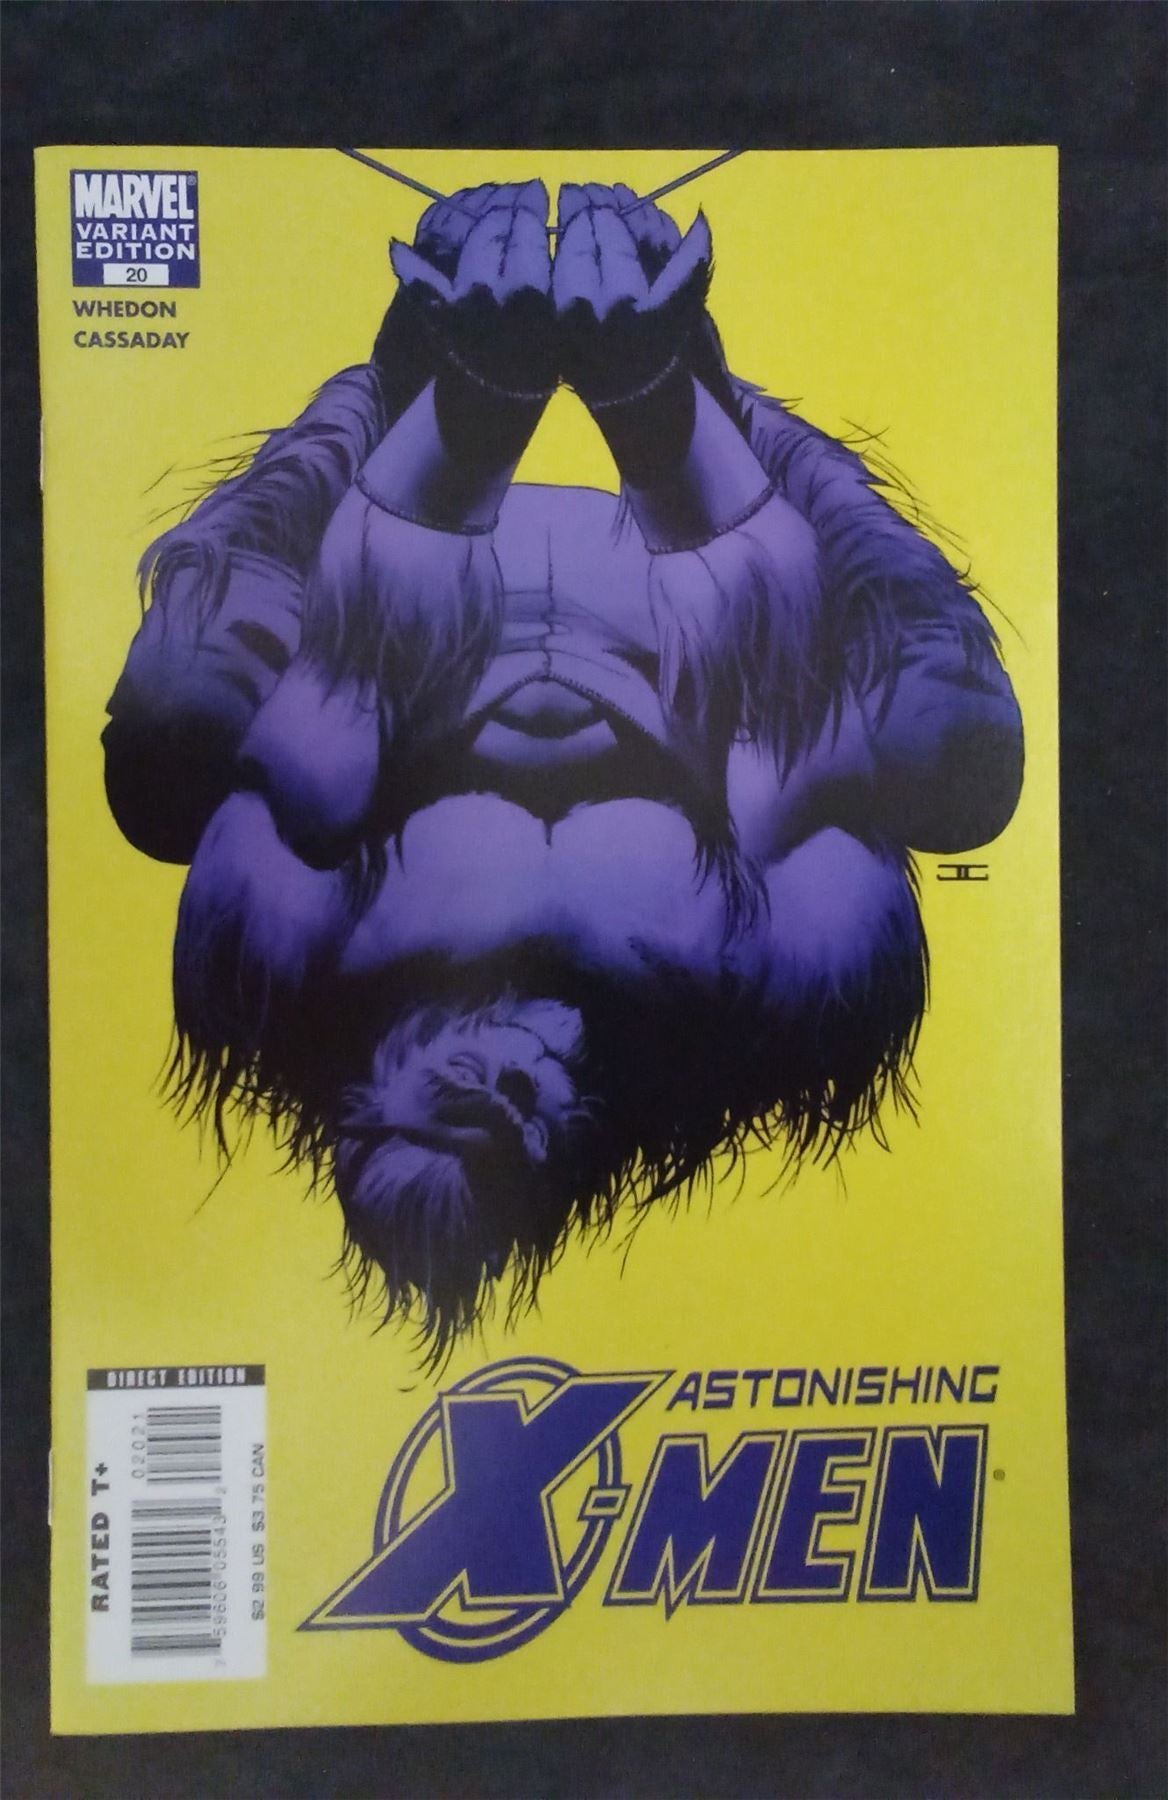 Astonishing X-Men #20 Beast Cover 2007 marvel Comic Book marvel Comic Book